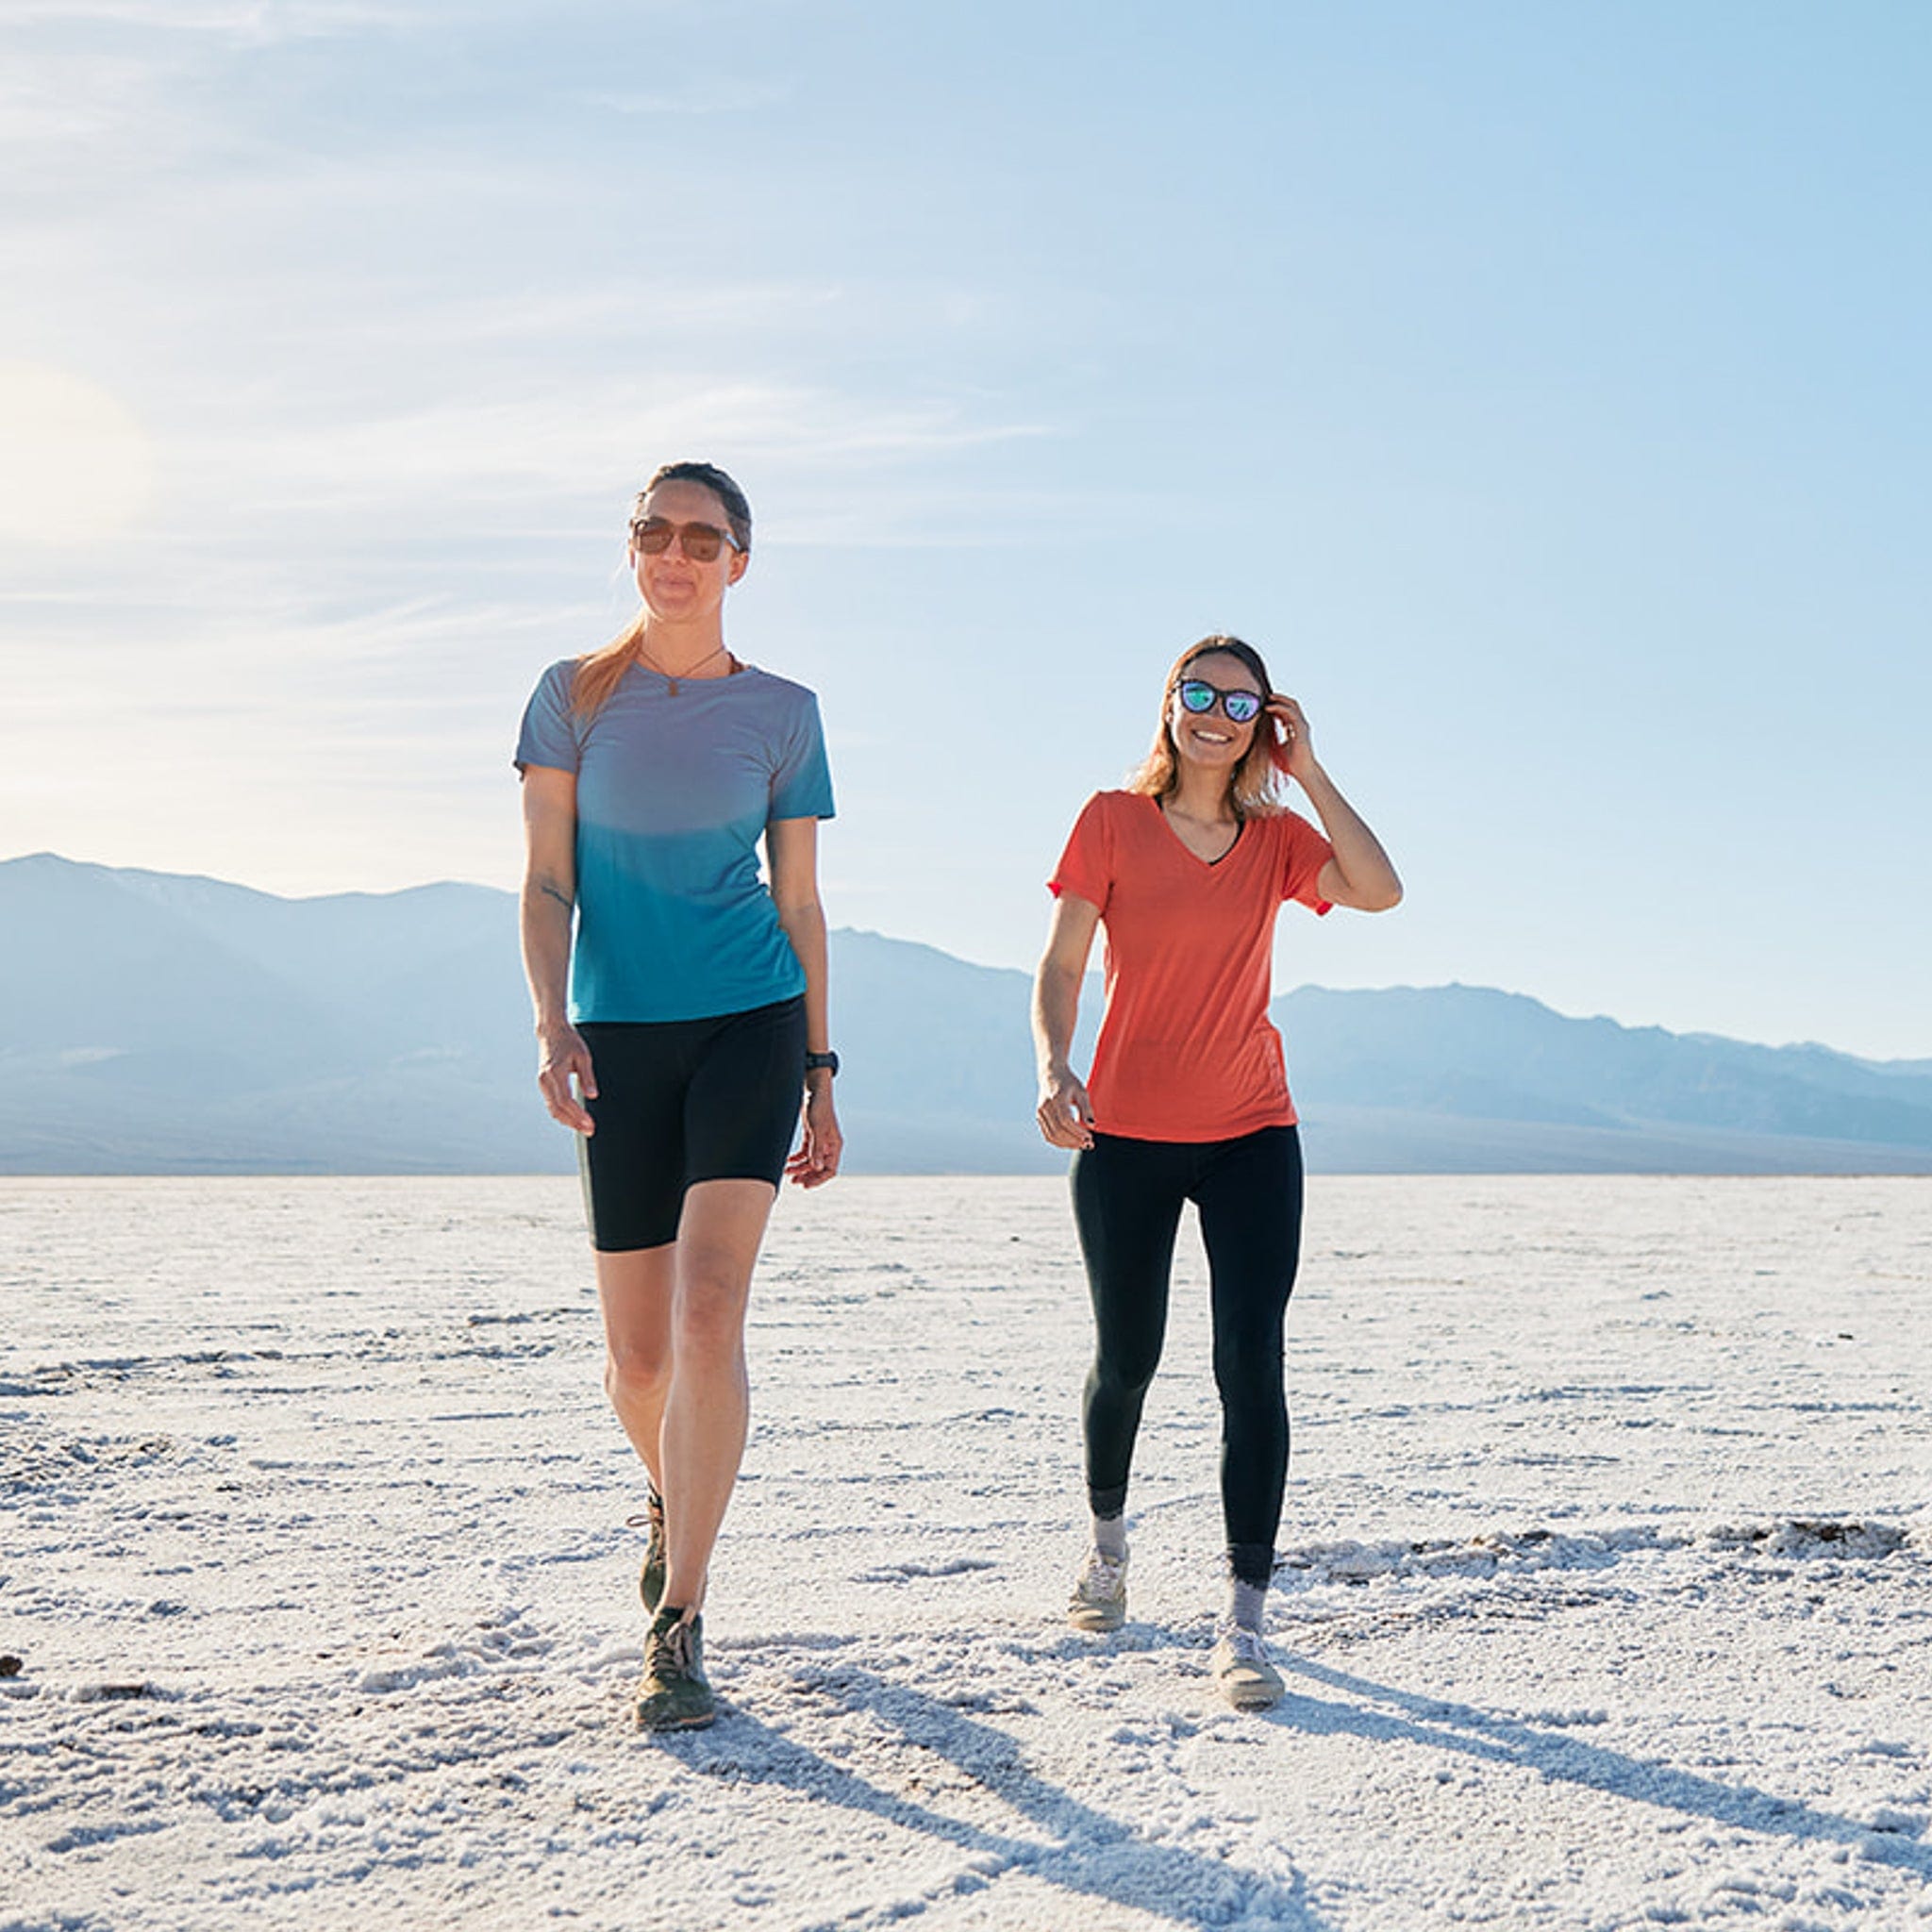 Two women wearing Wander shirts from Ridge Merino walking through Death Valley